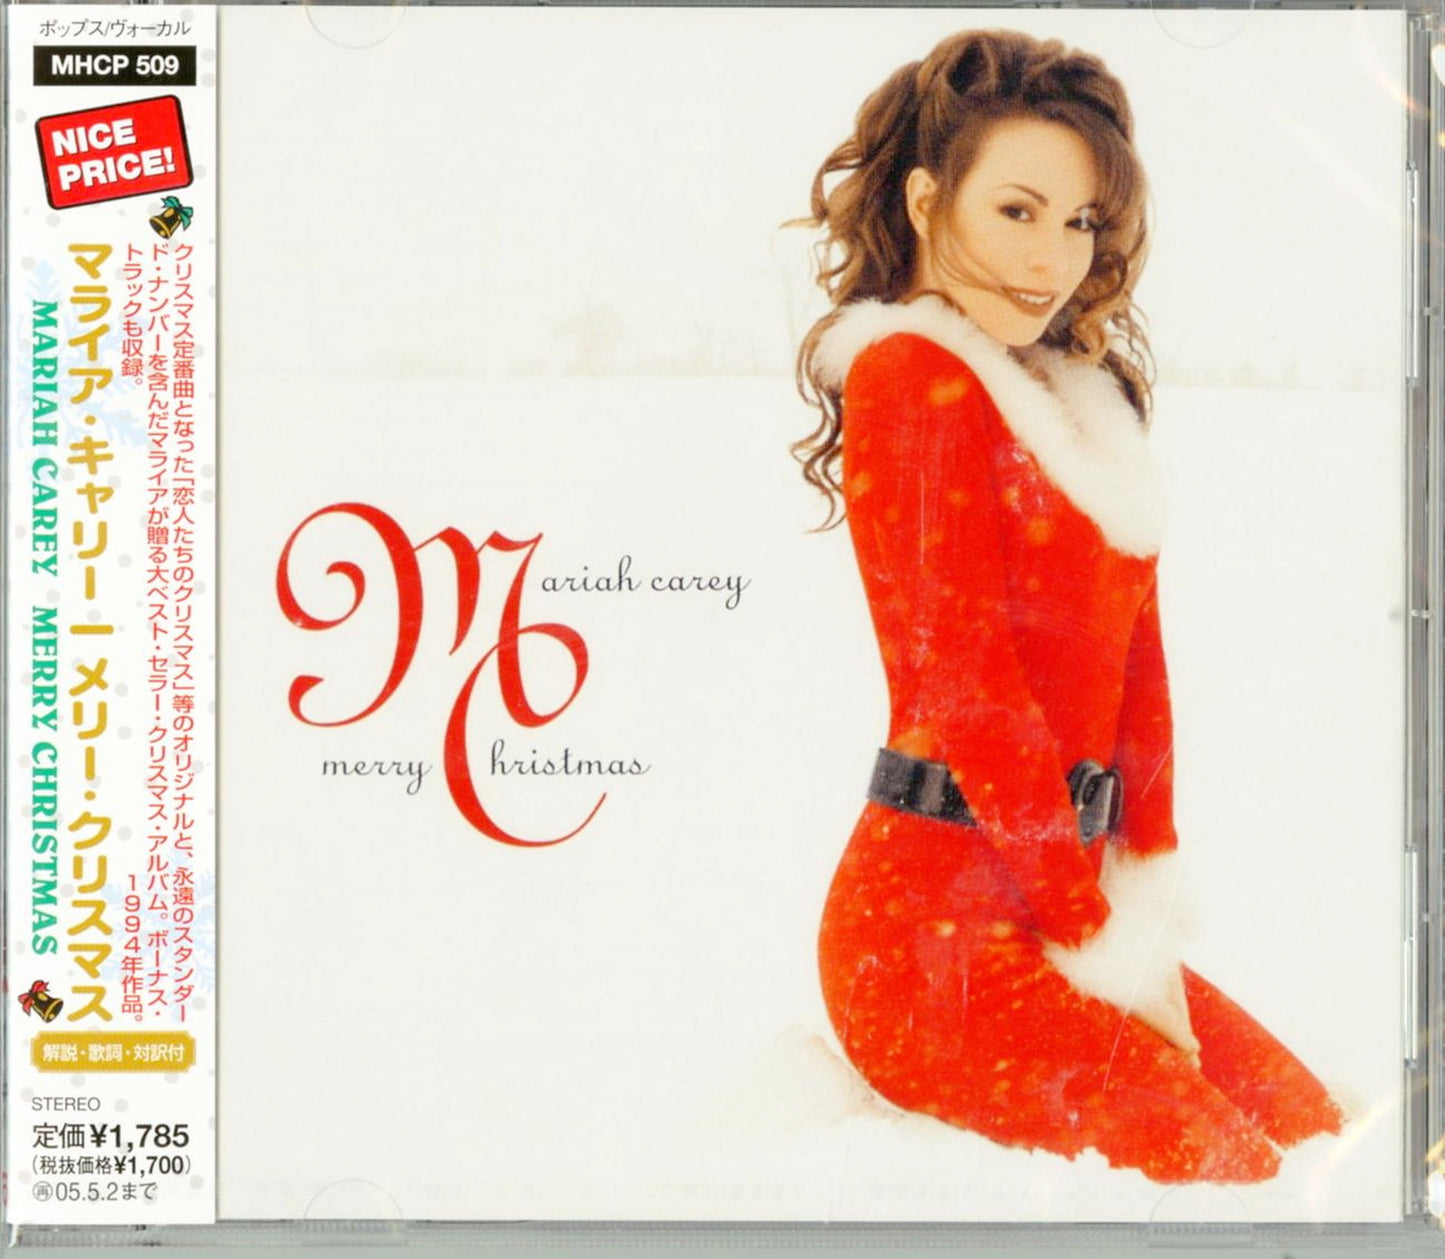 Mariah Carey - Merry Christmas (Release year: 2004) - Japan CD